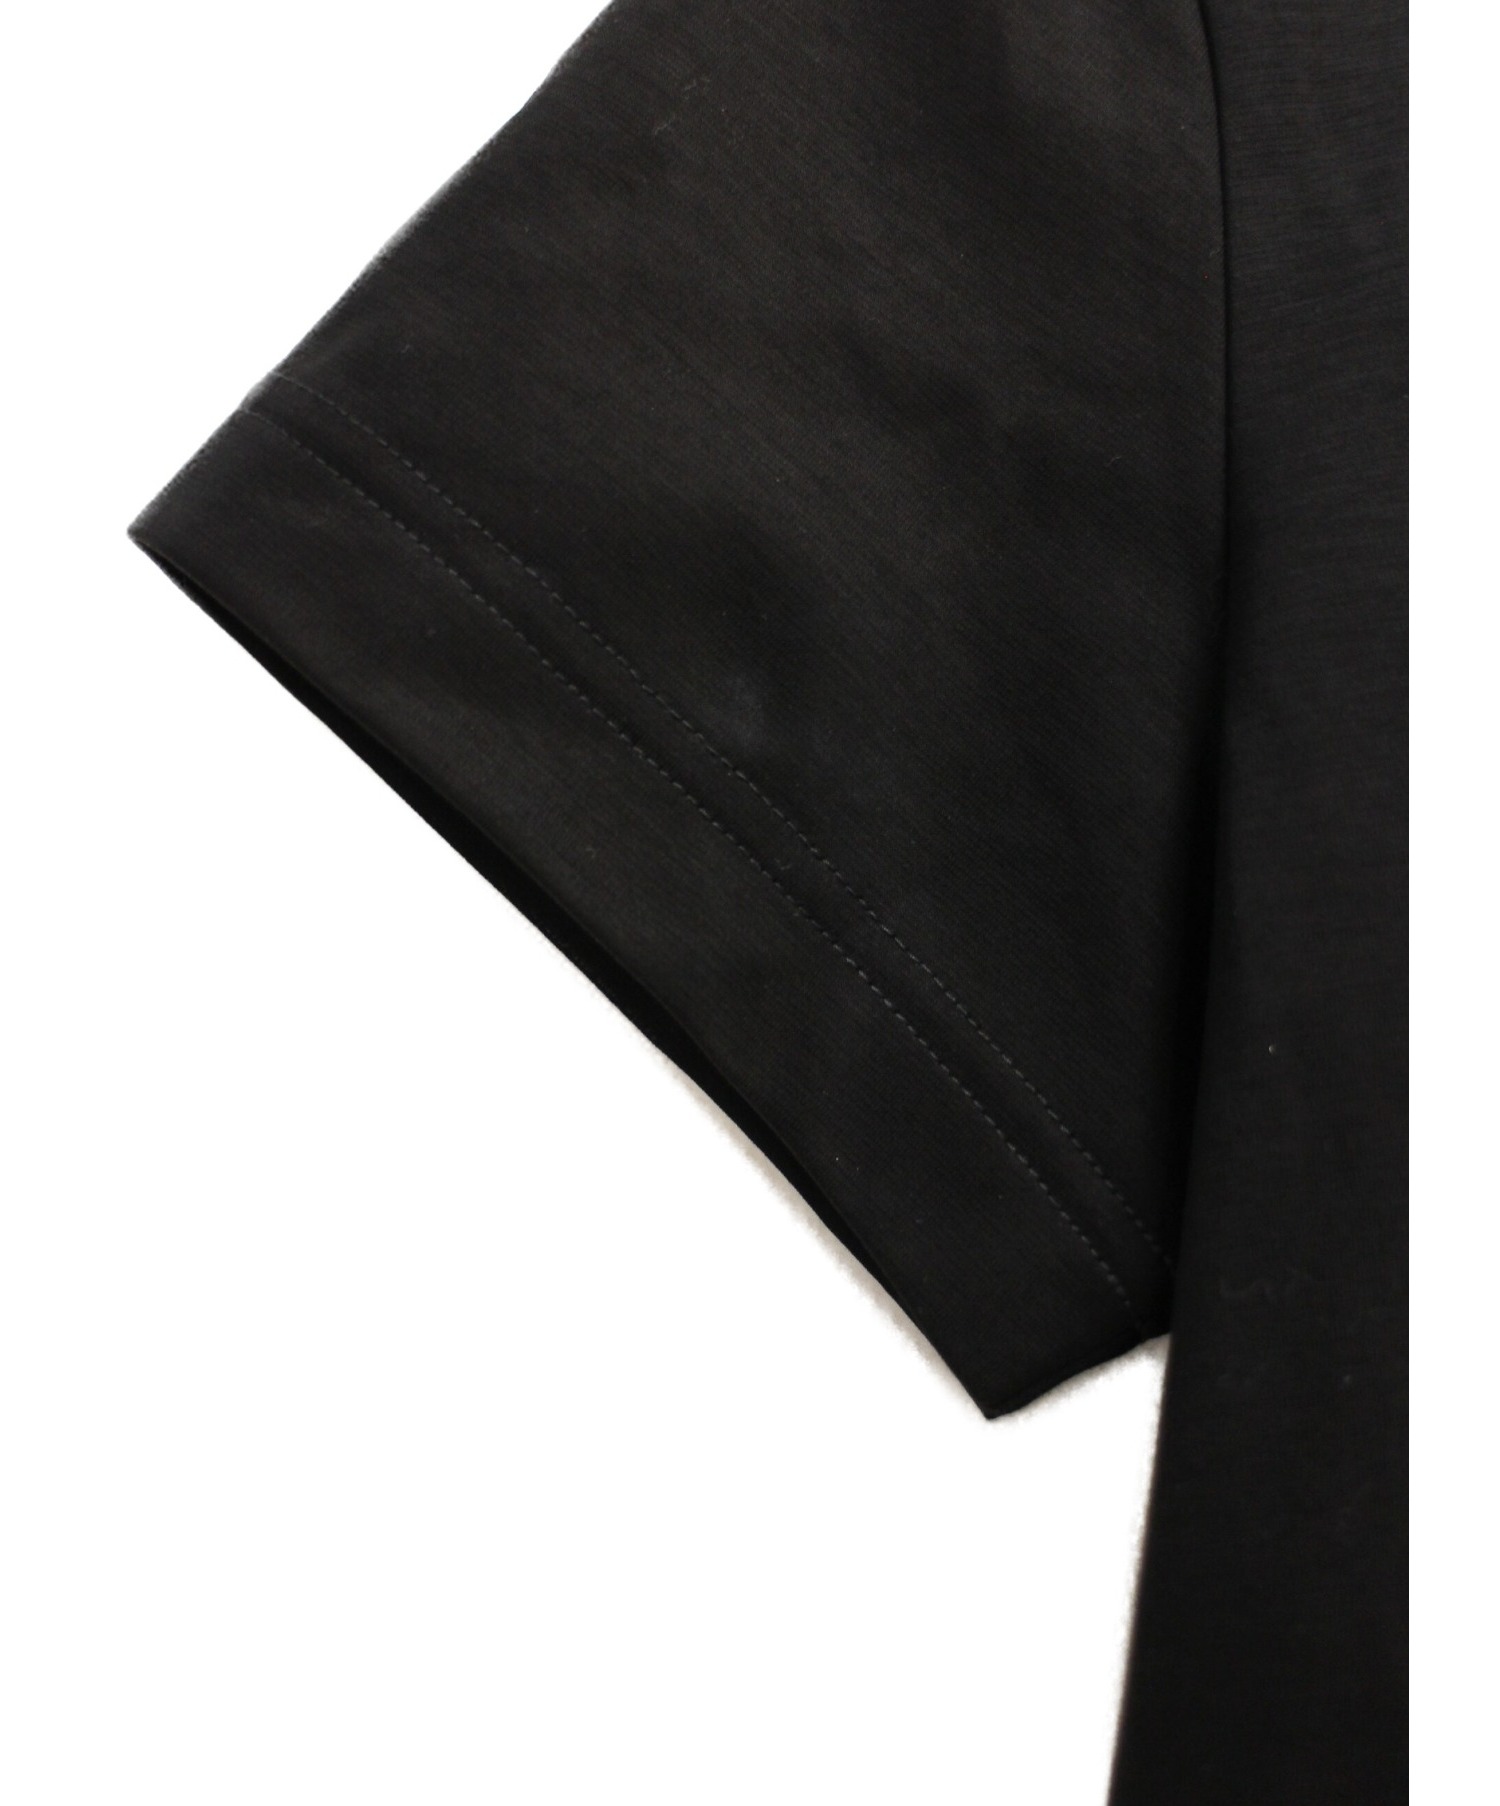 noir kei ninomiya (ノワール ケイ ニノミヤ) ポケット付きTシャツ ブラック サイズ:XS